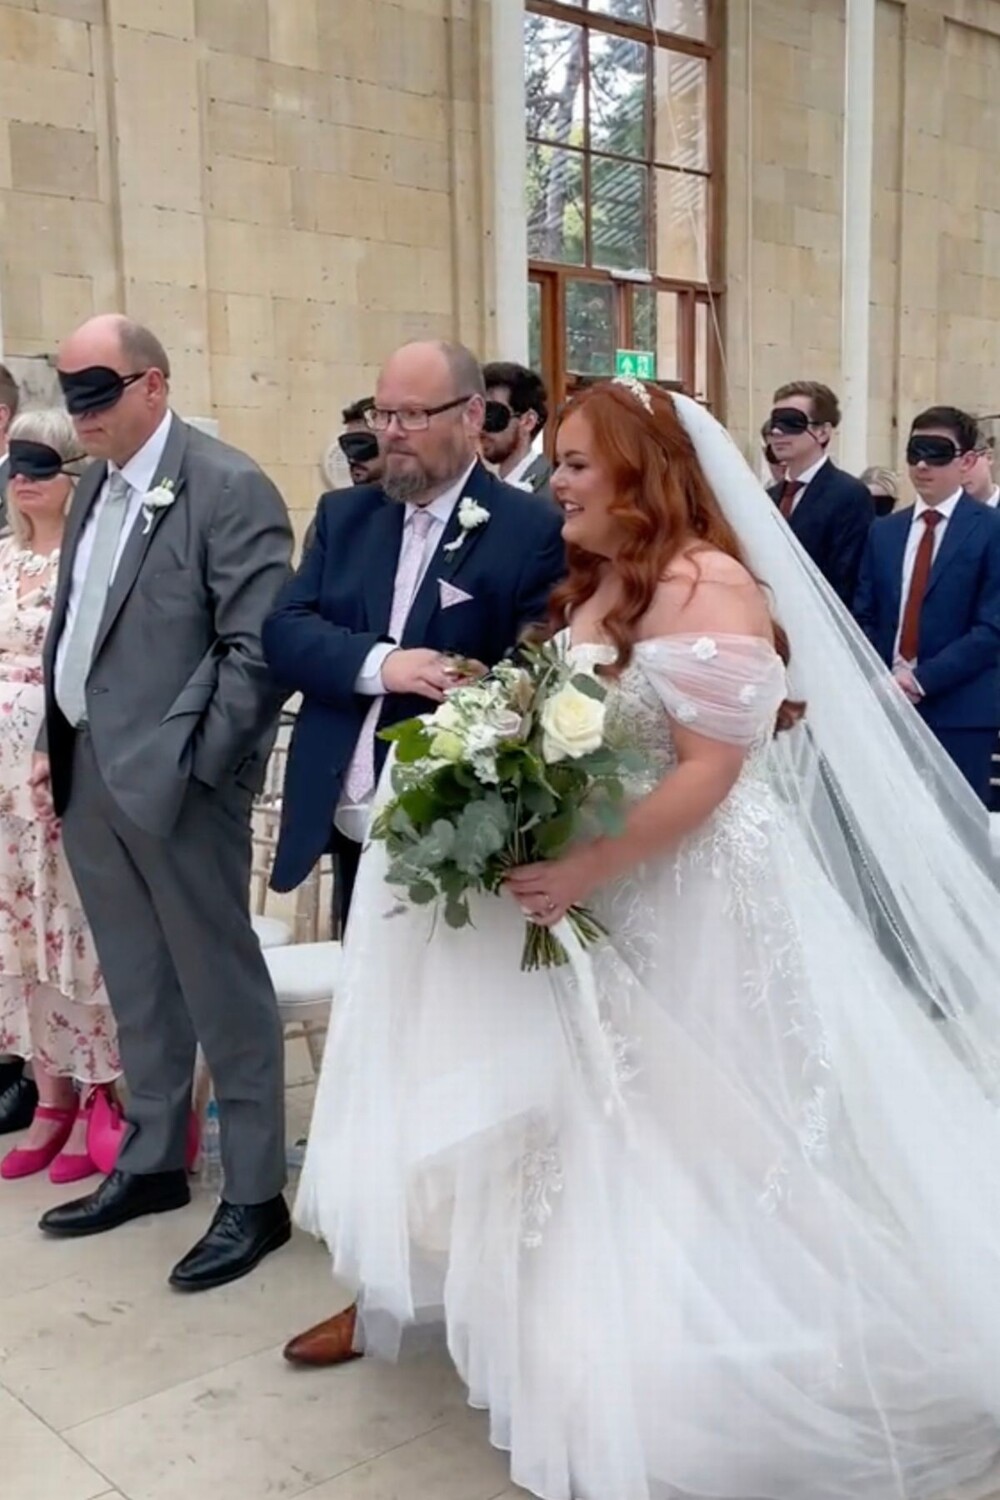 Ради невесты жених и гости завязали глаза